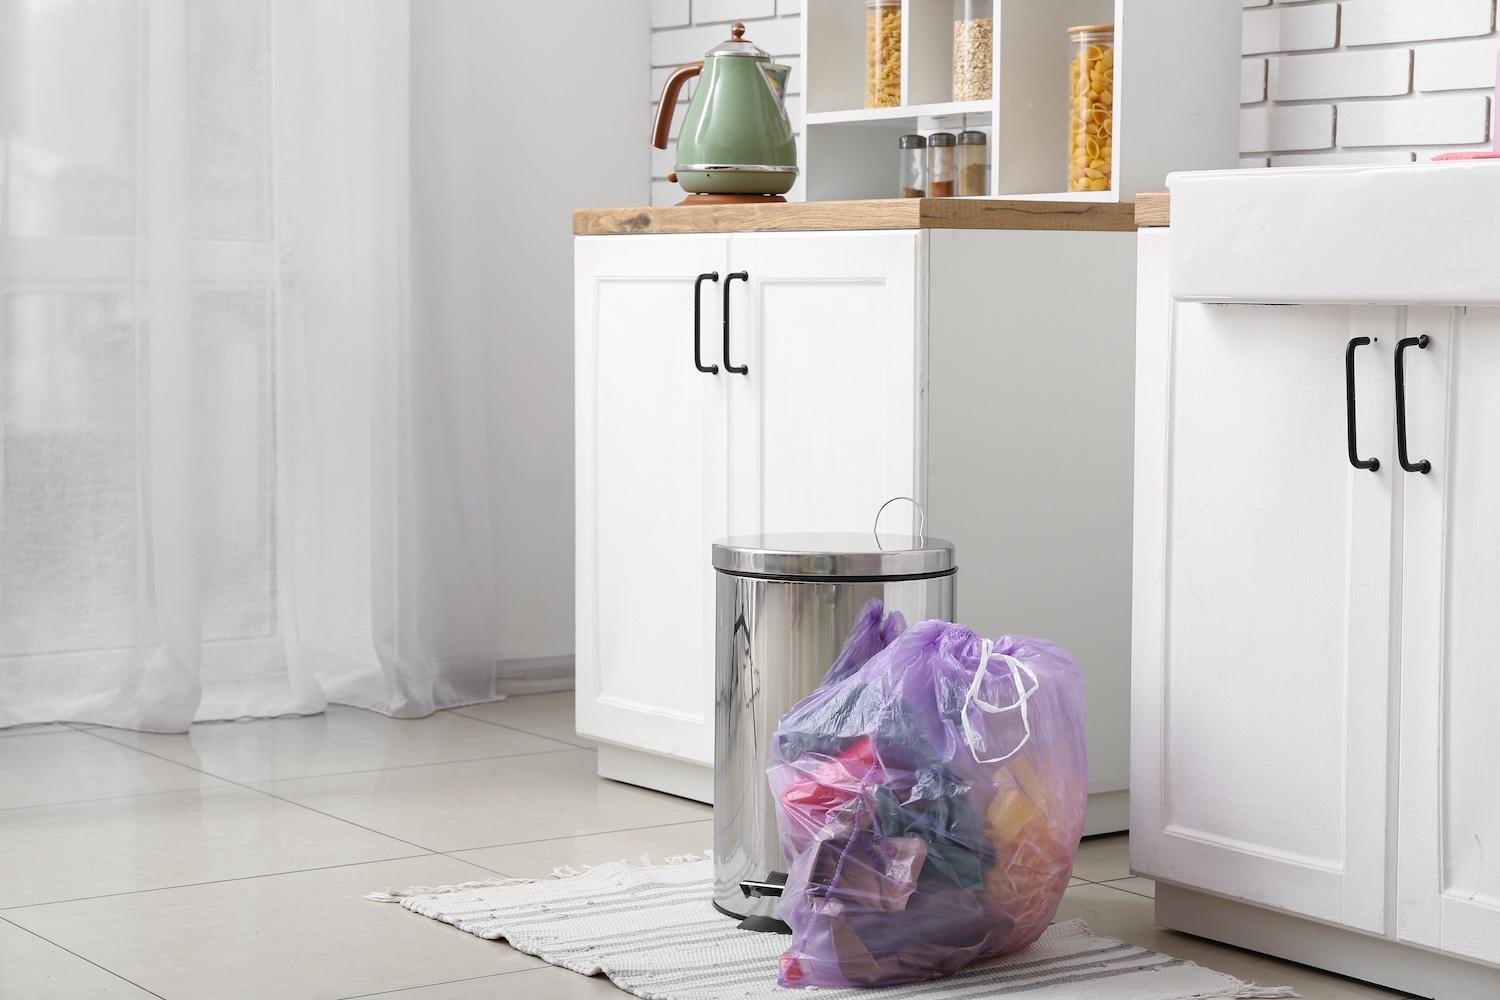 trash bag next to trash can in a kitchen - triplepundit waste audit